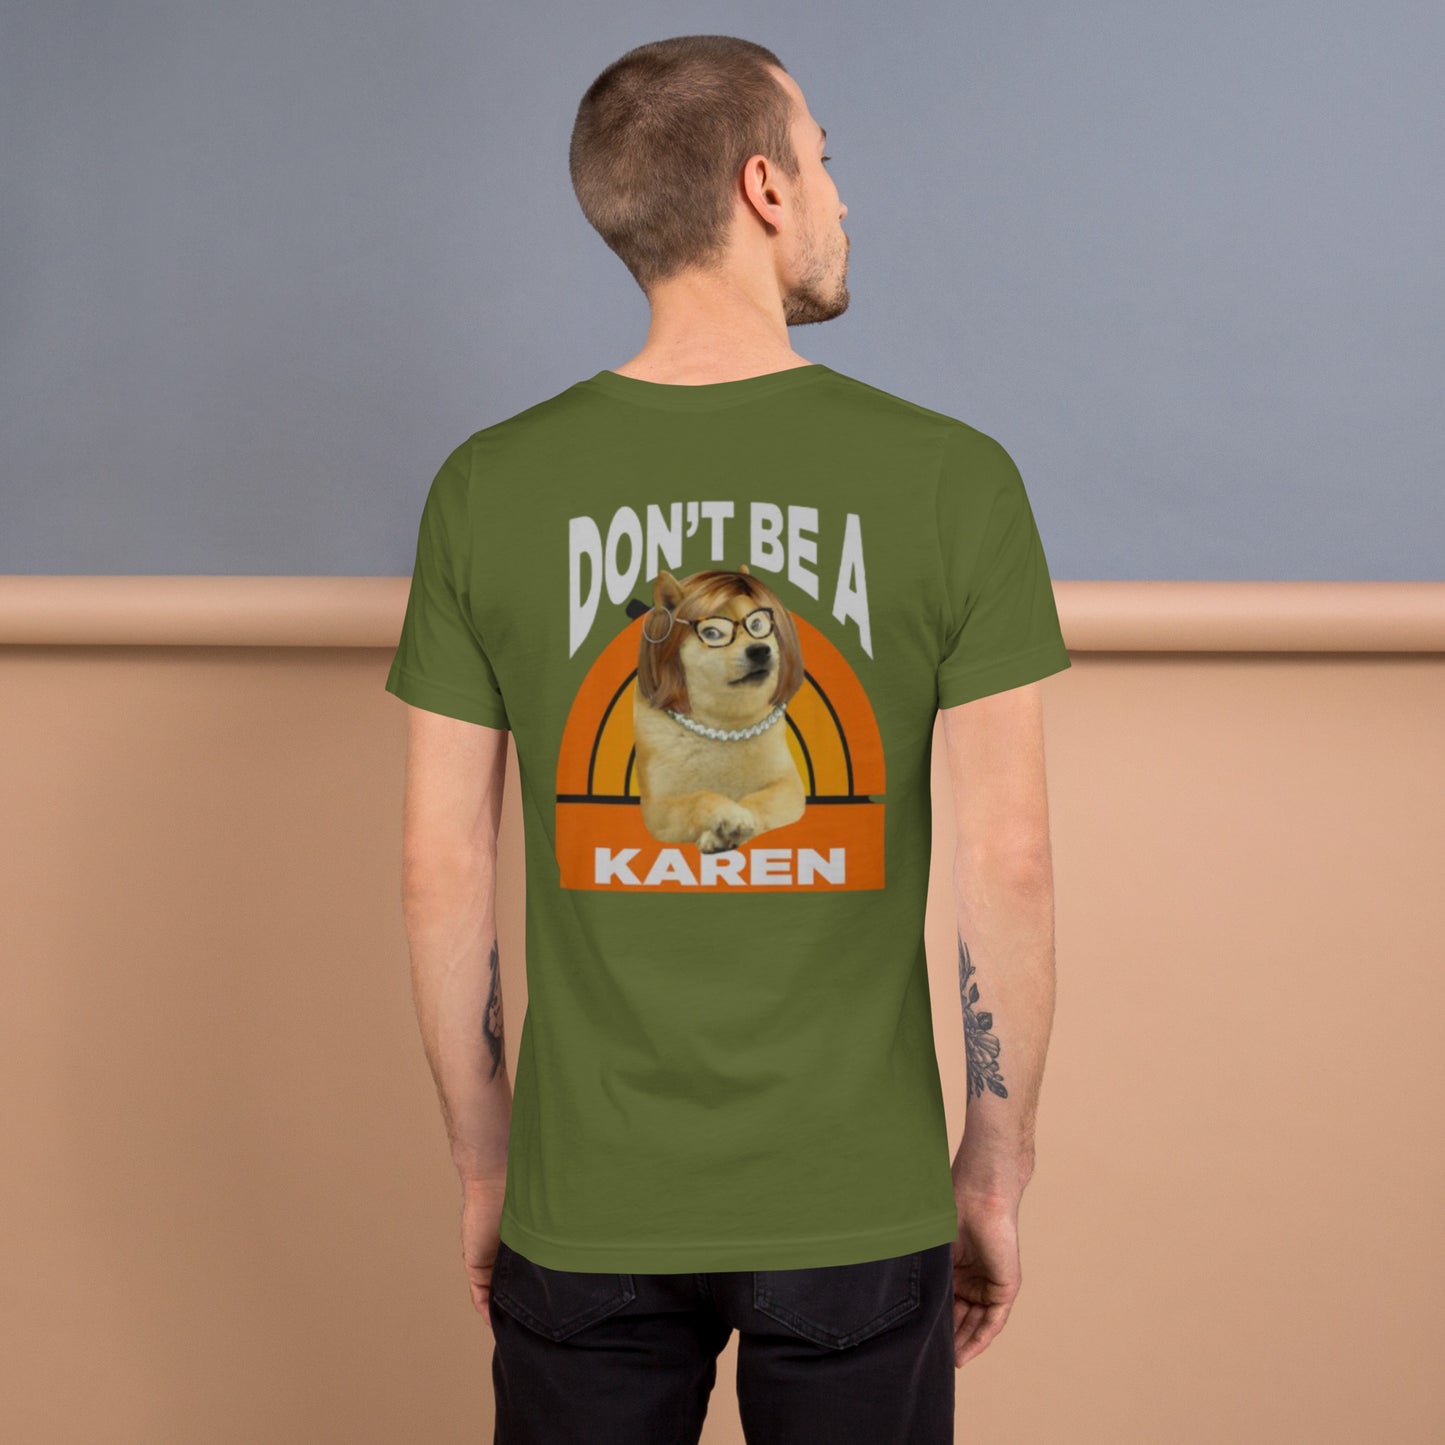 Dodge Karen - T-Shirt